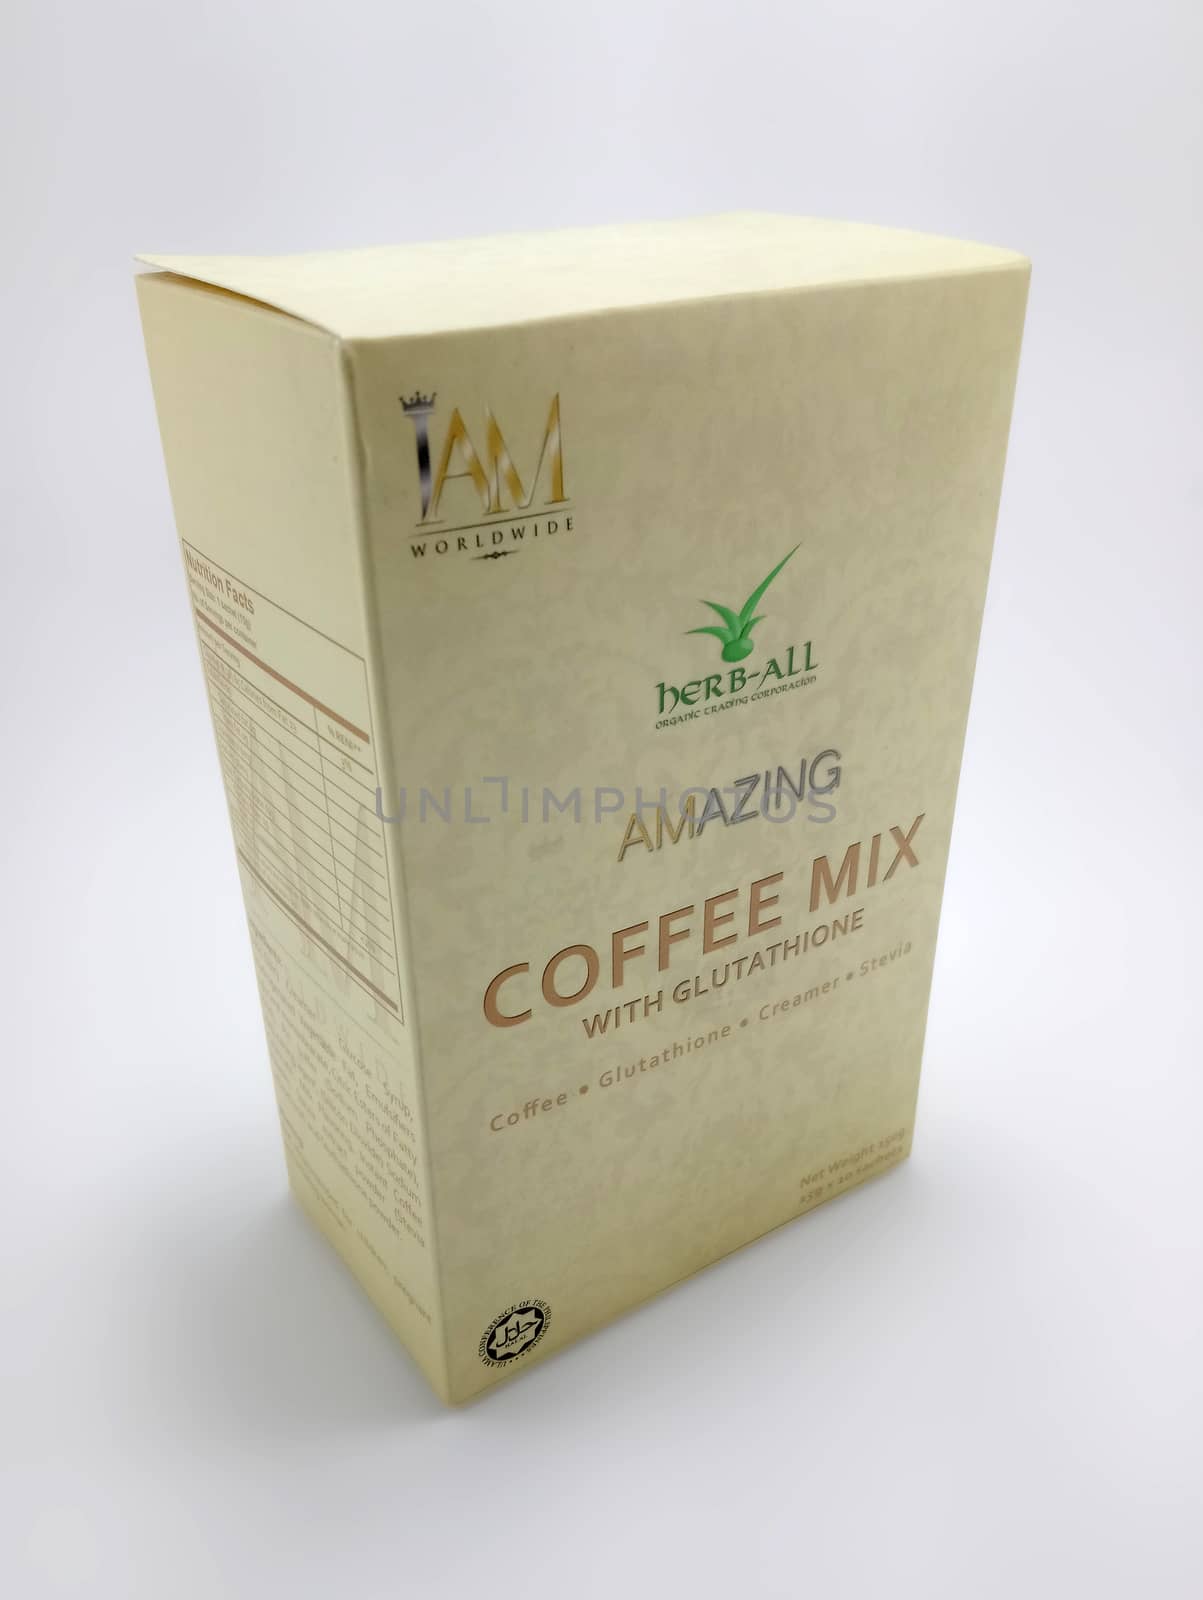 Iam amazing coffee mix with glutathione in Manila, Philippines by imwaltersy